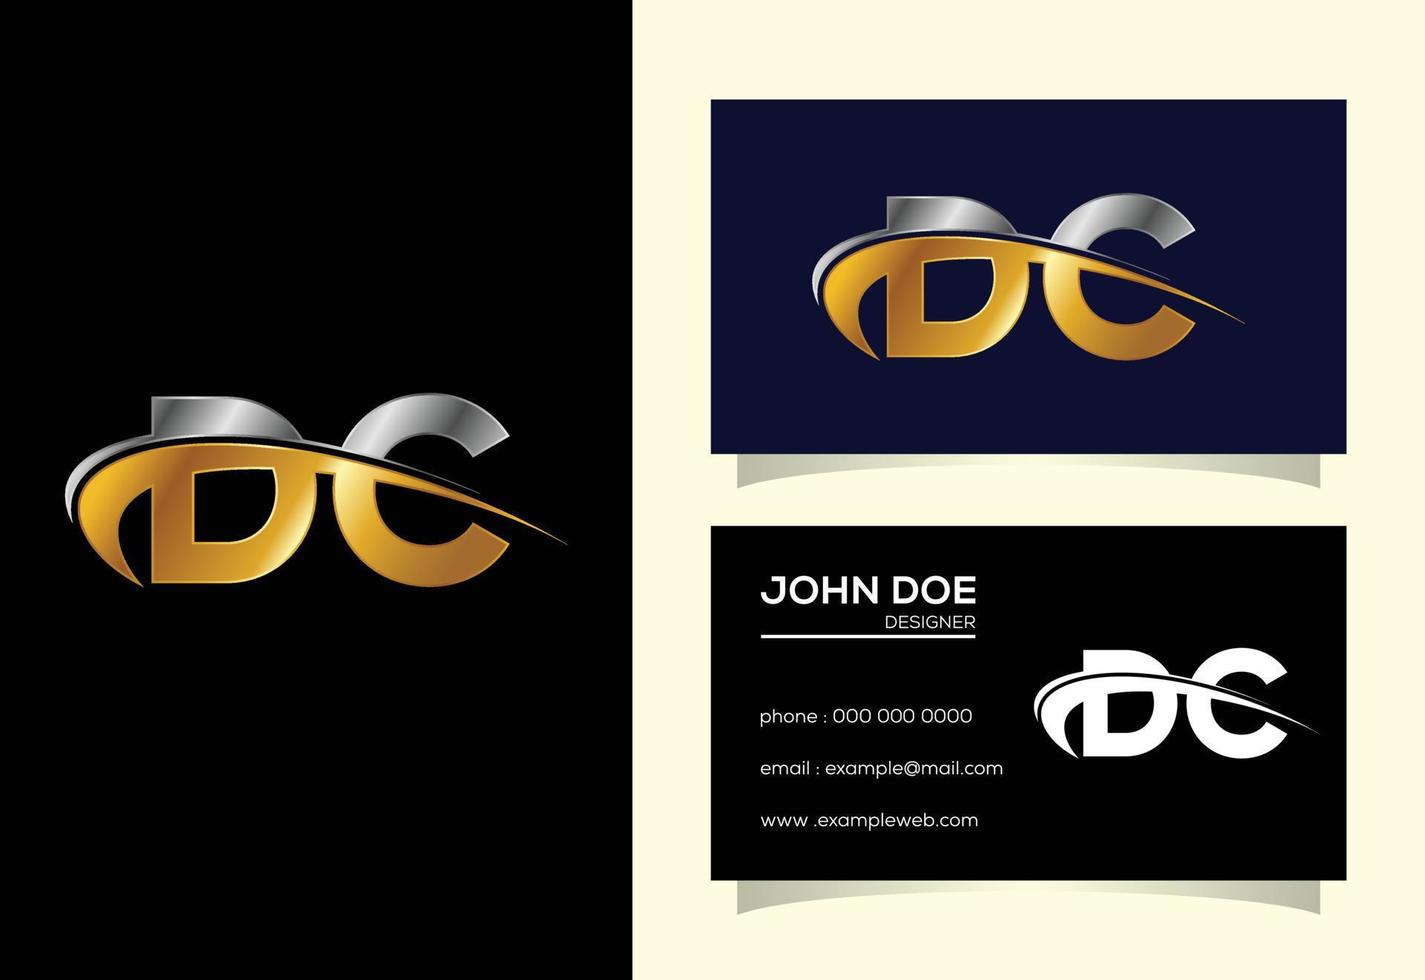 modelo de design de logotipo de letra inicial dc. símbolo gráfico do alfabeto para identidade de negócios corporativos vetor